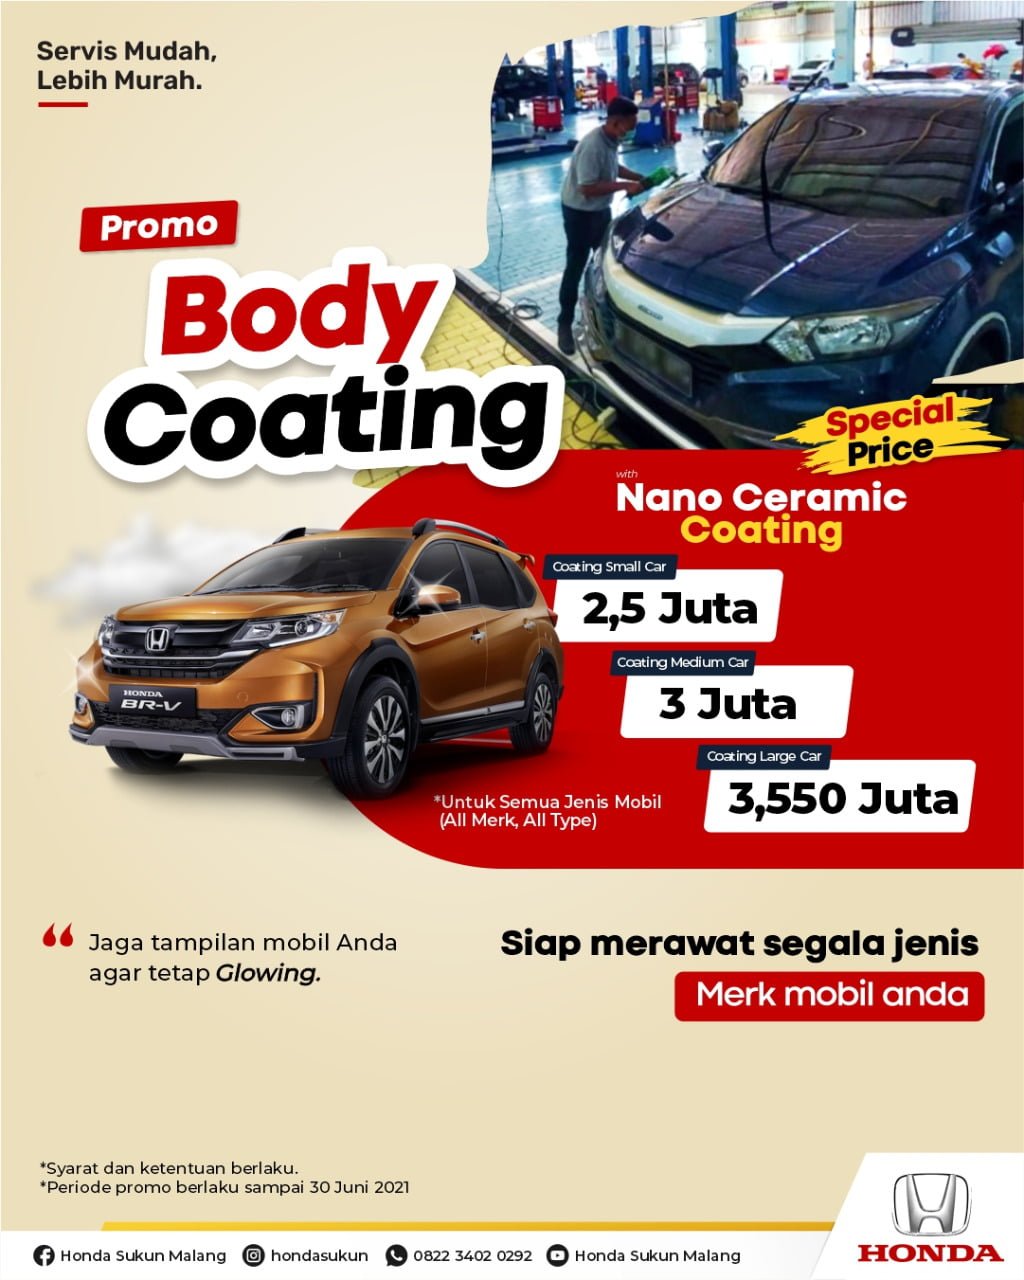 Body Coating Nano Ceramic Honda Malang